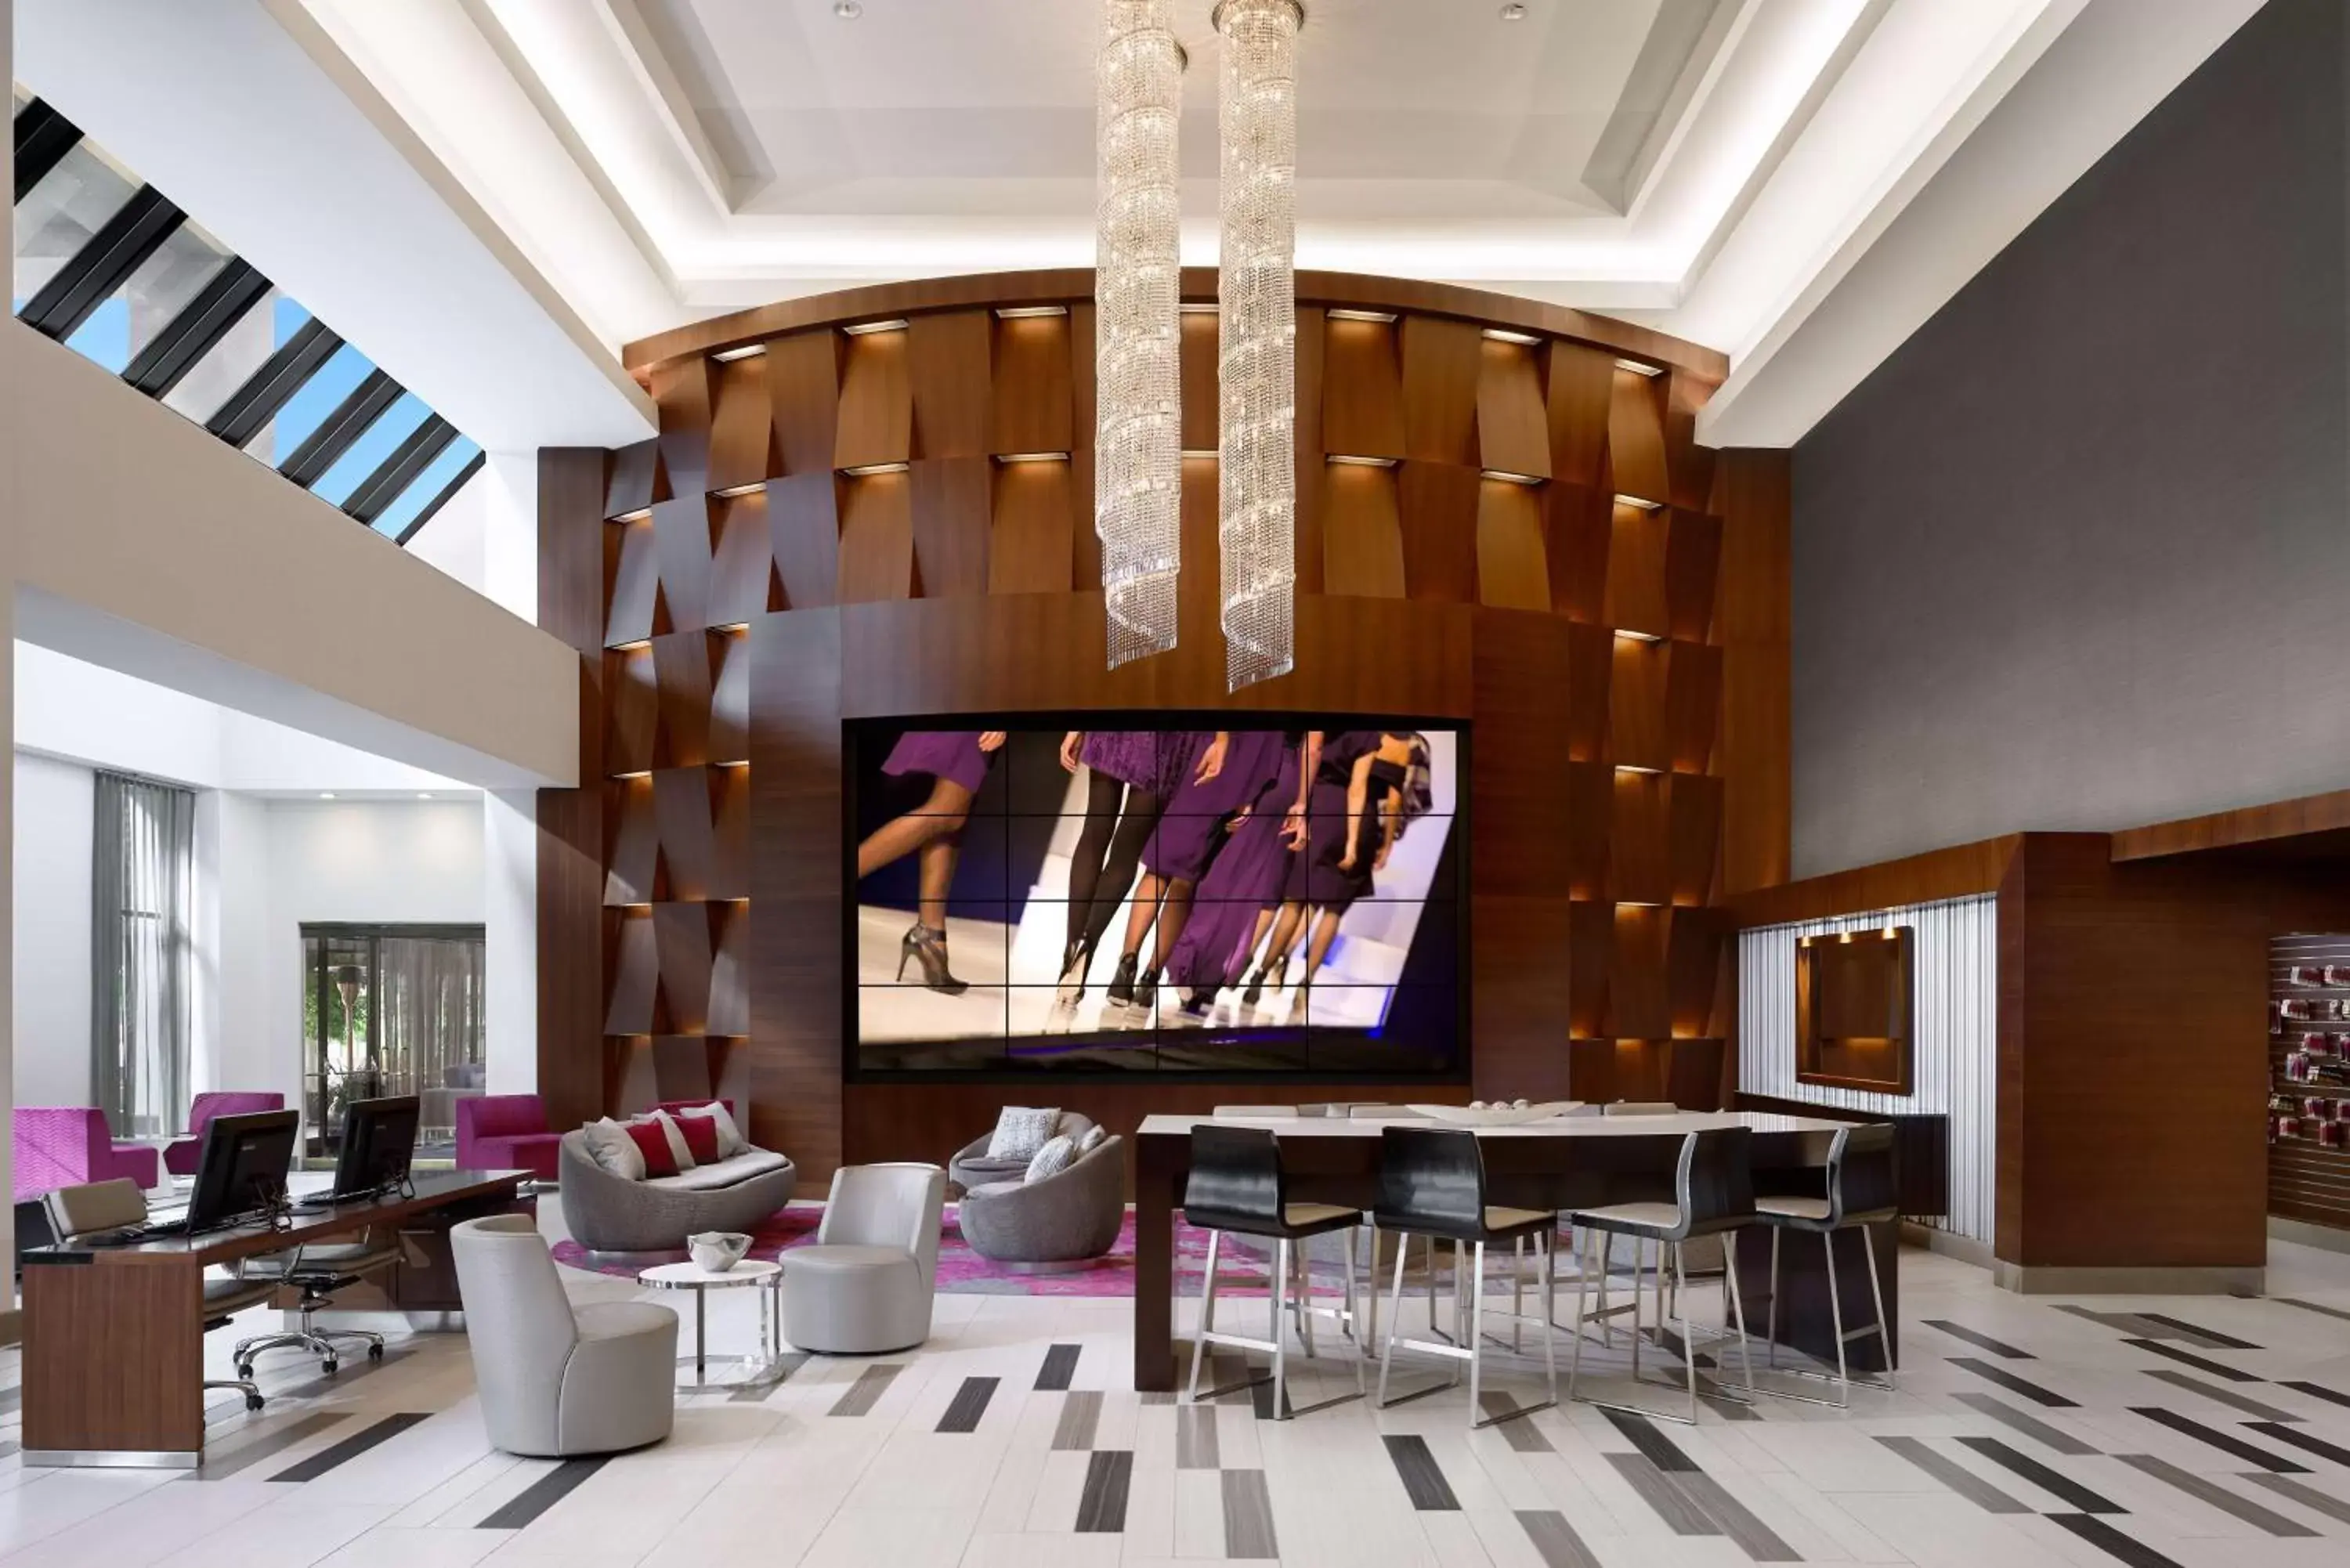 Lobby or reception in Hilton Woodland Hills/ Los Angeles